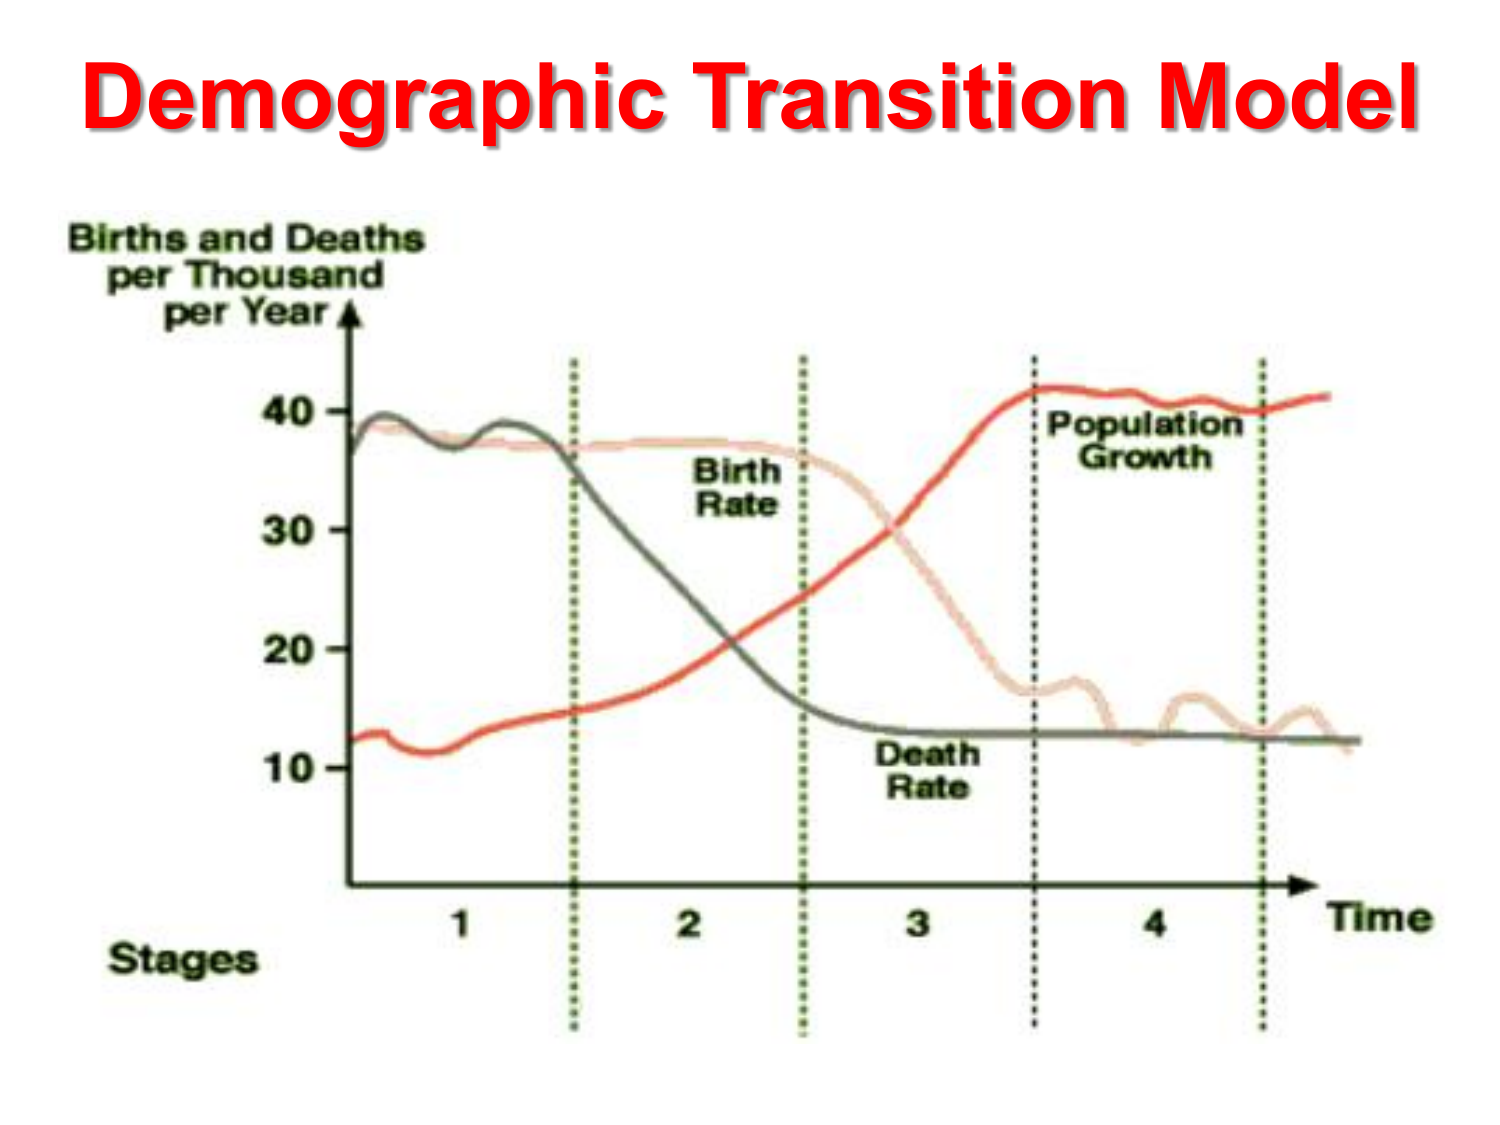 describe the demographic transition model